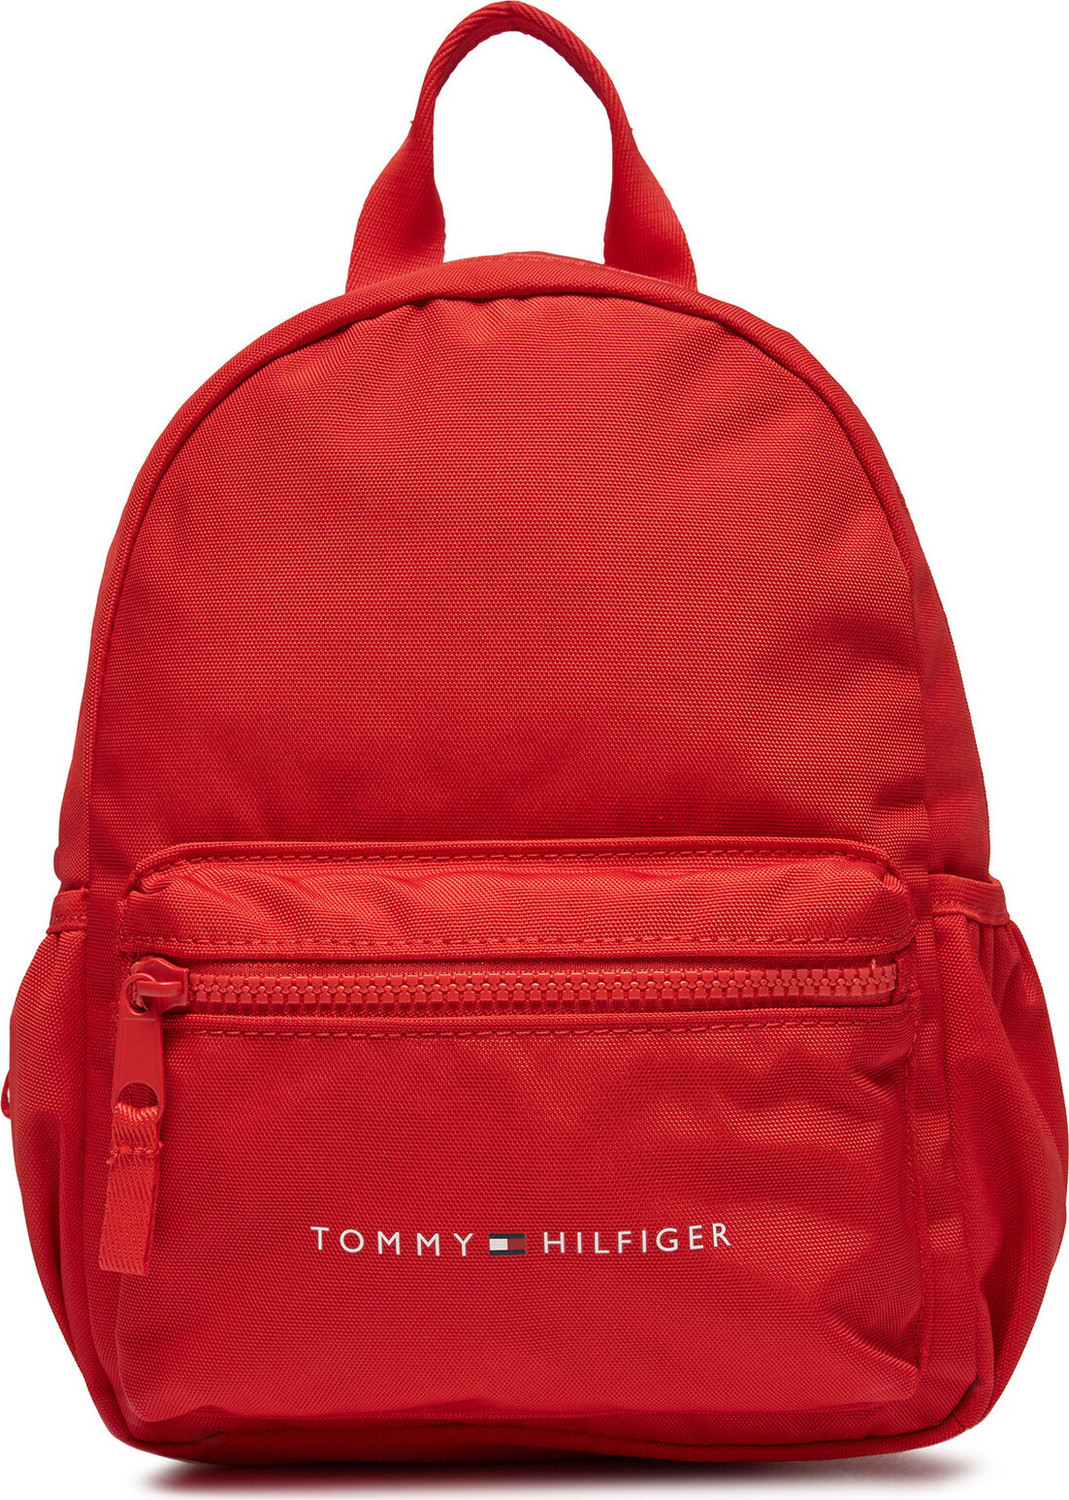 Batoh Tommy Hilfiger Th Essential Mini Backpack AU0AU01770 Fierce Red XND